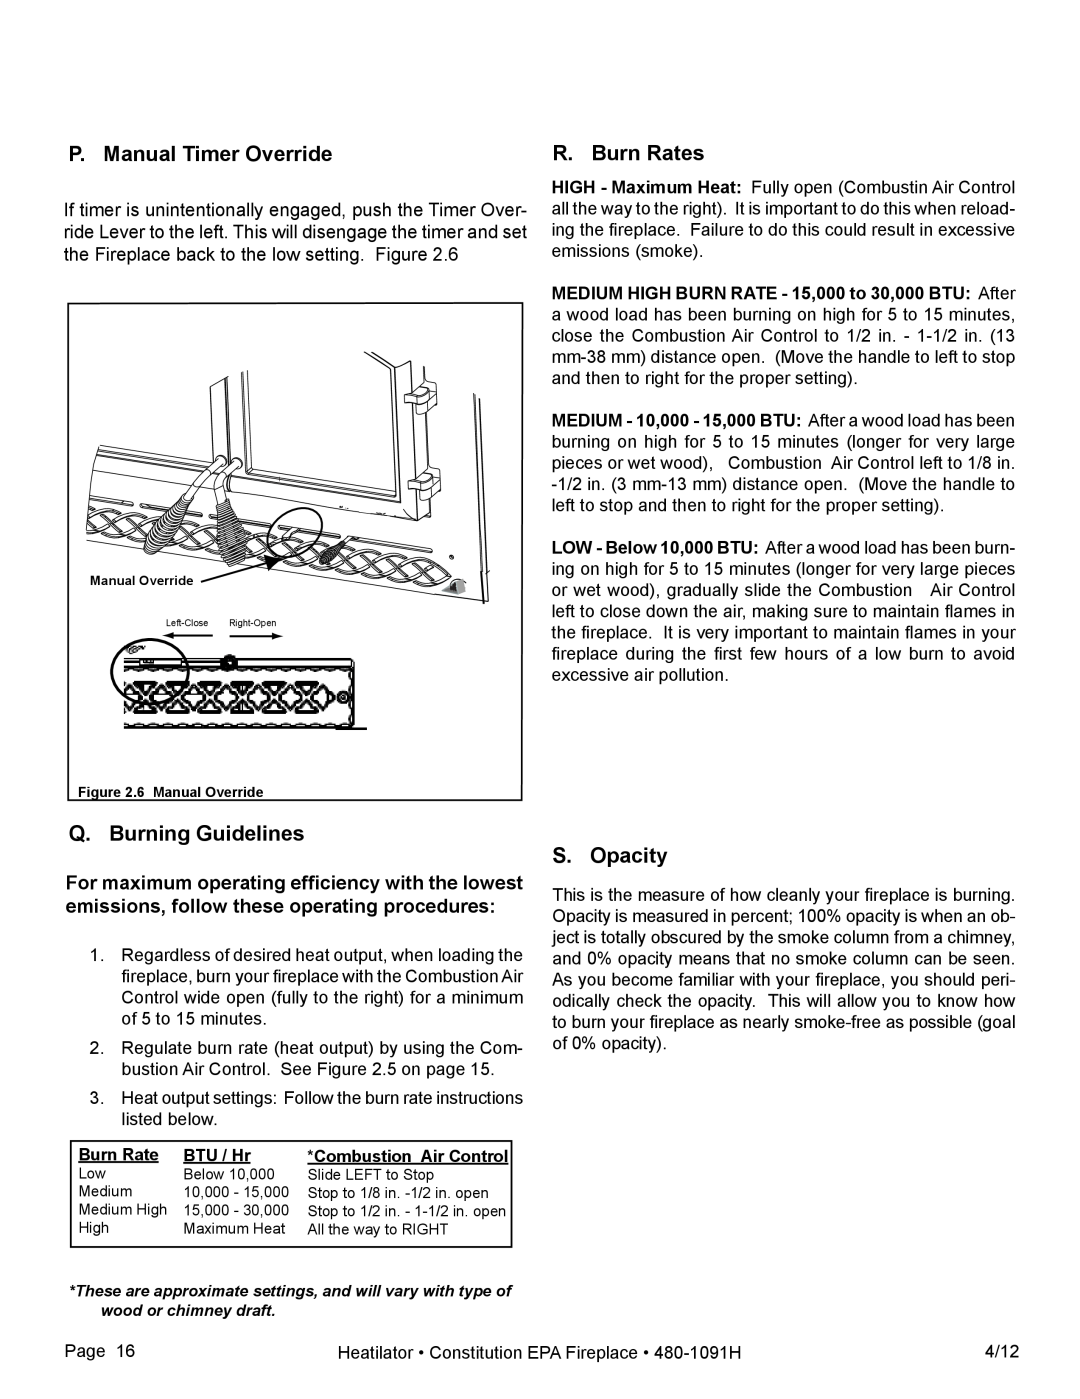 Heatiator C40 P. Manual Timer Override, R. Burn Rates, Q. Burning Guidelines, S. Opacity, BTU / Hr, Combustion Air Control 